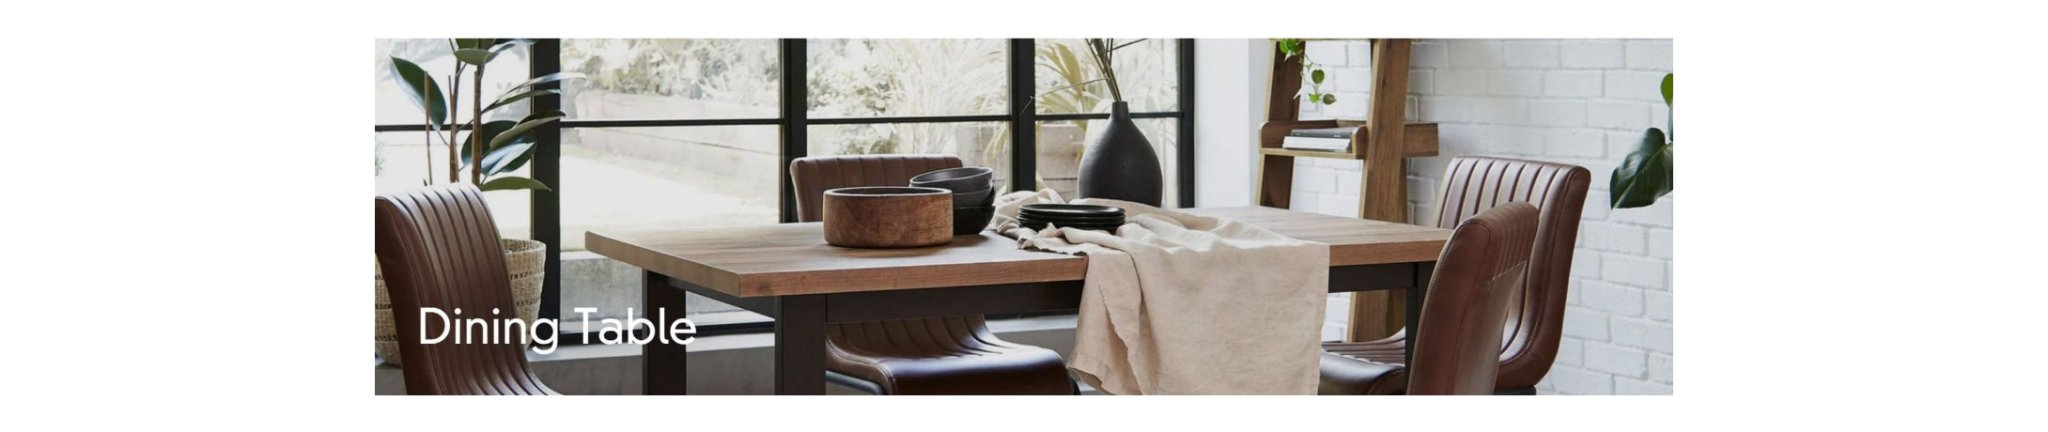 Kitchen & Dining Room Tables - Newstart Furniture